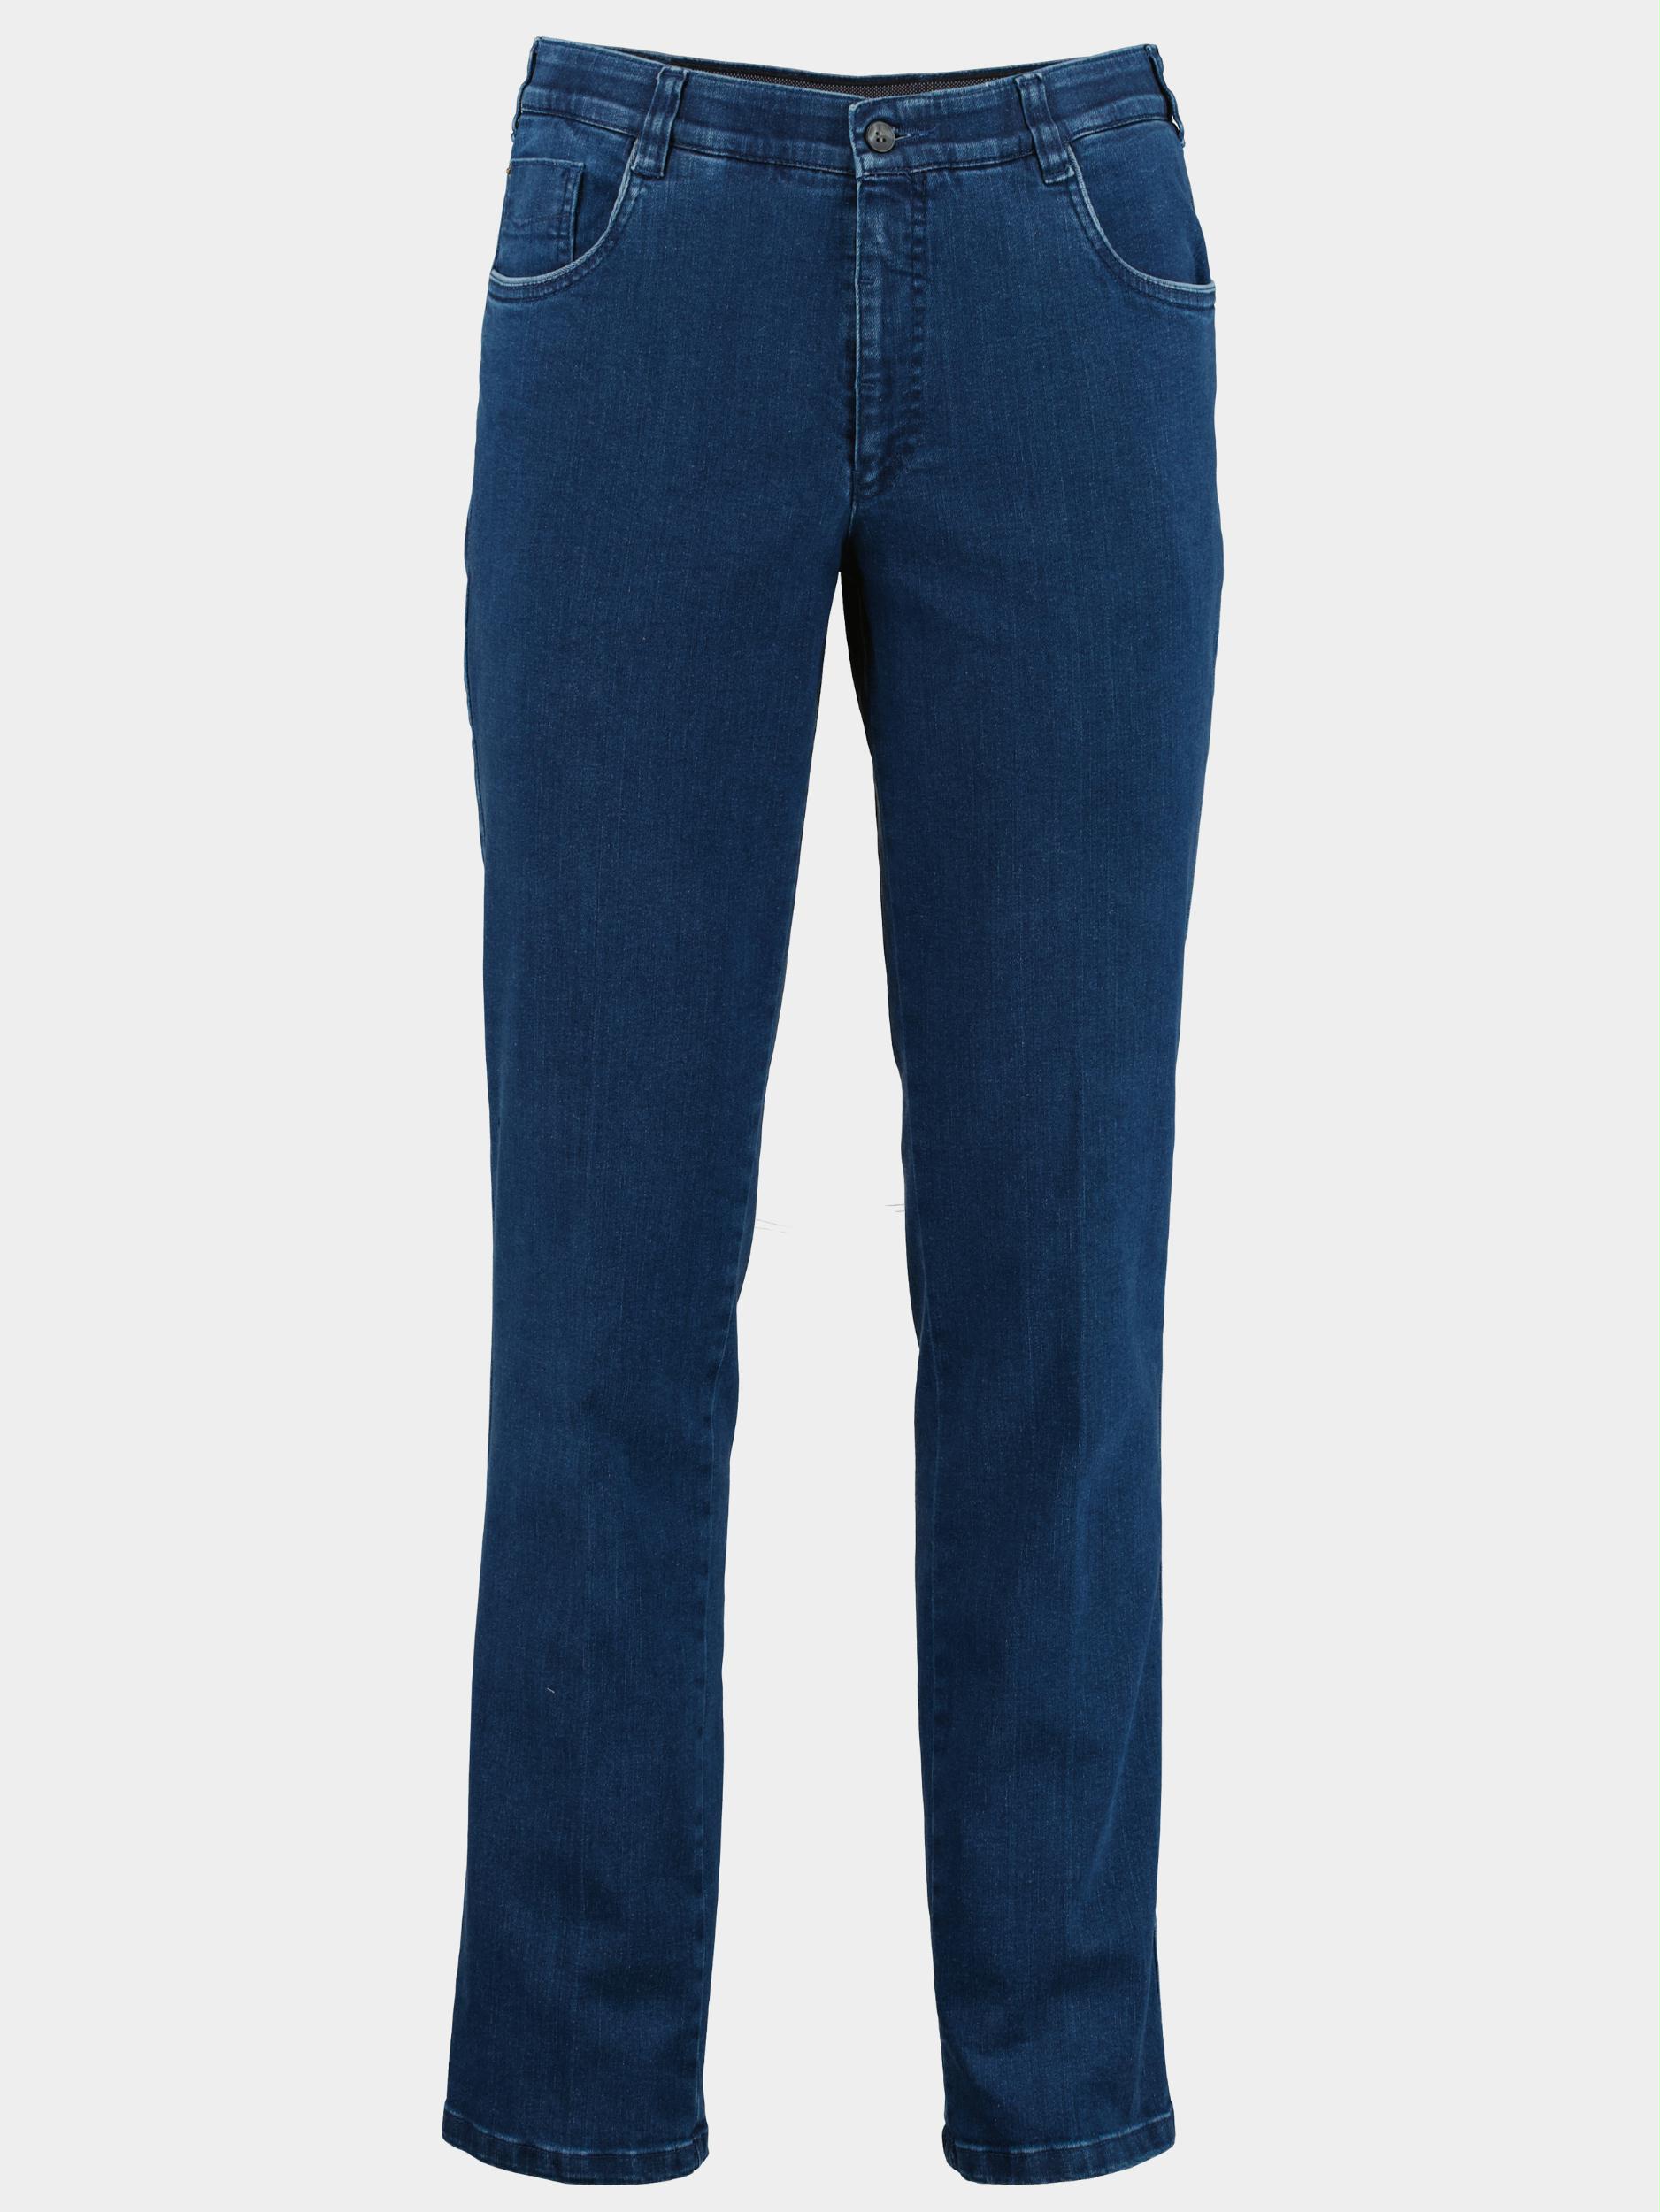 F043 Flatfront Jeans Blauw  2081.1.11.170/651